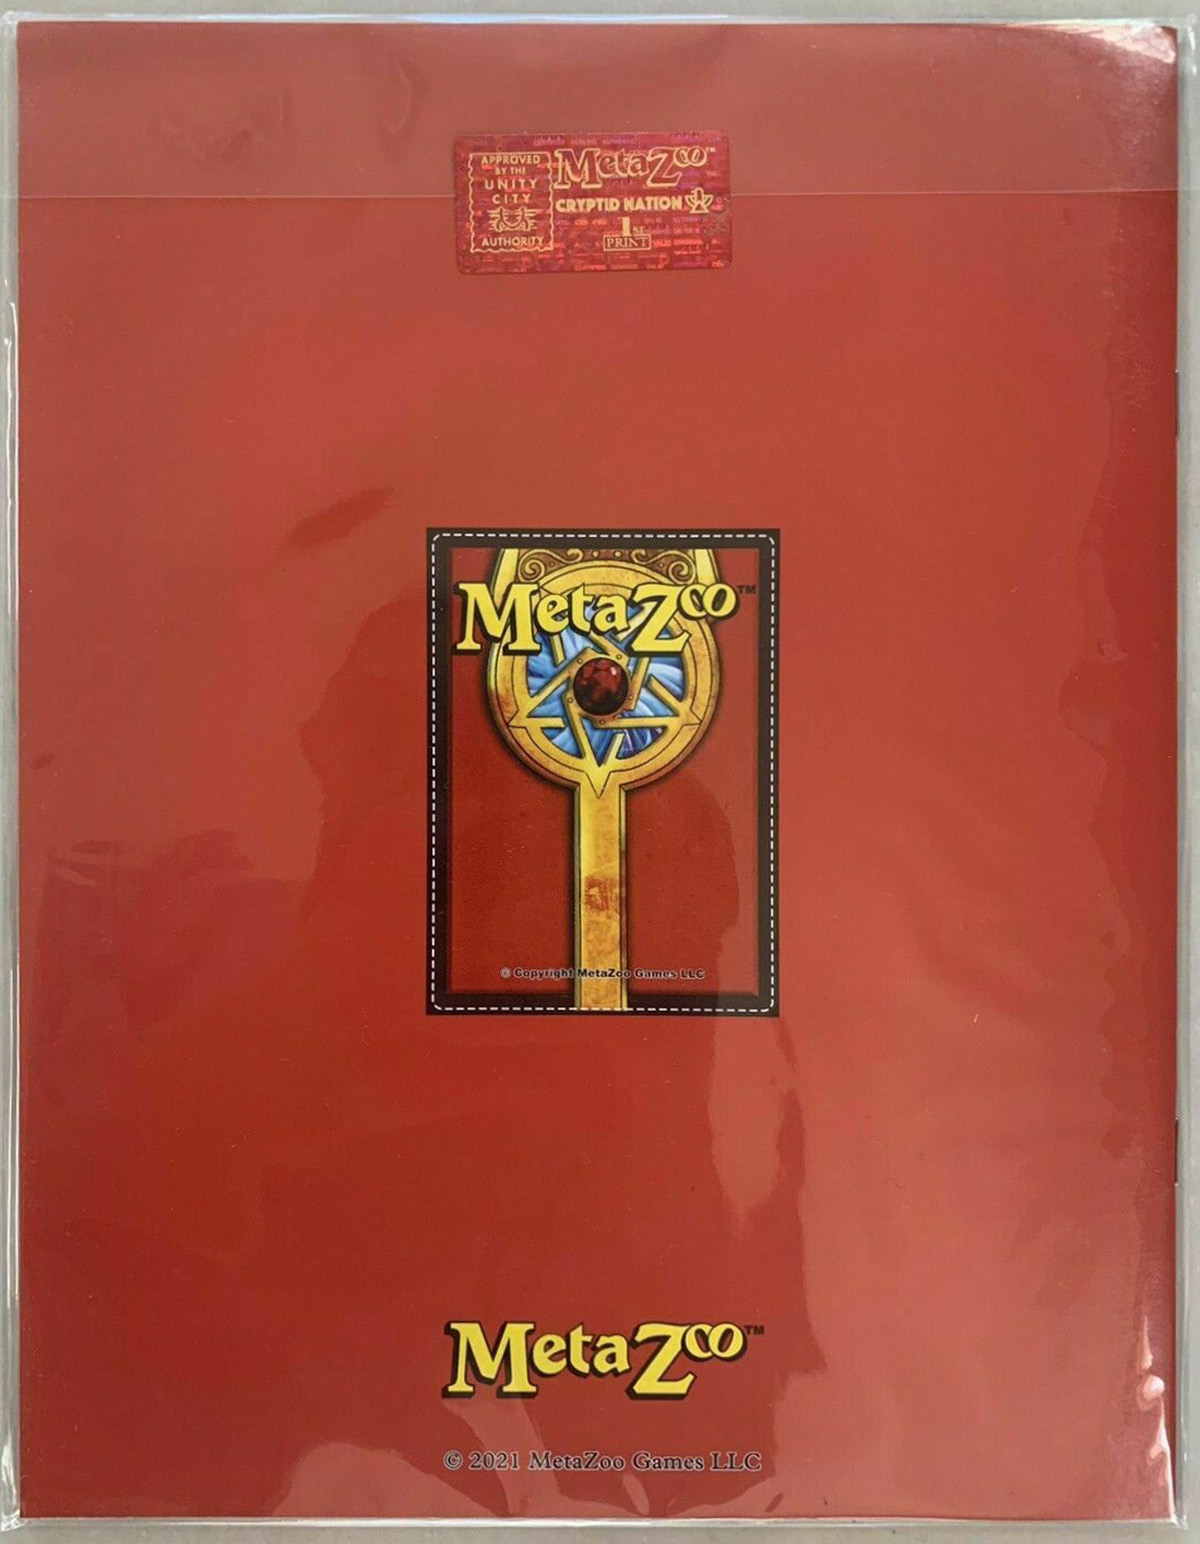 MetaZoo Illustrated Novel - Chapter 2 Print 1 - Back